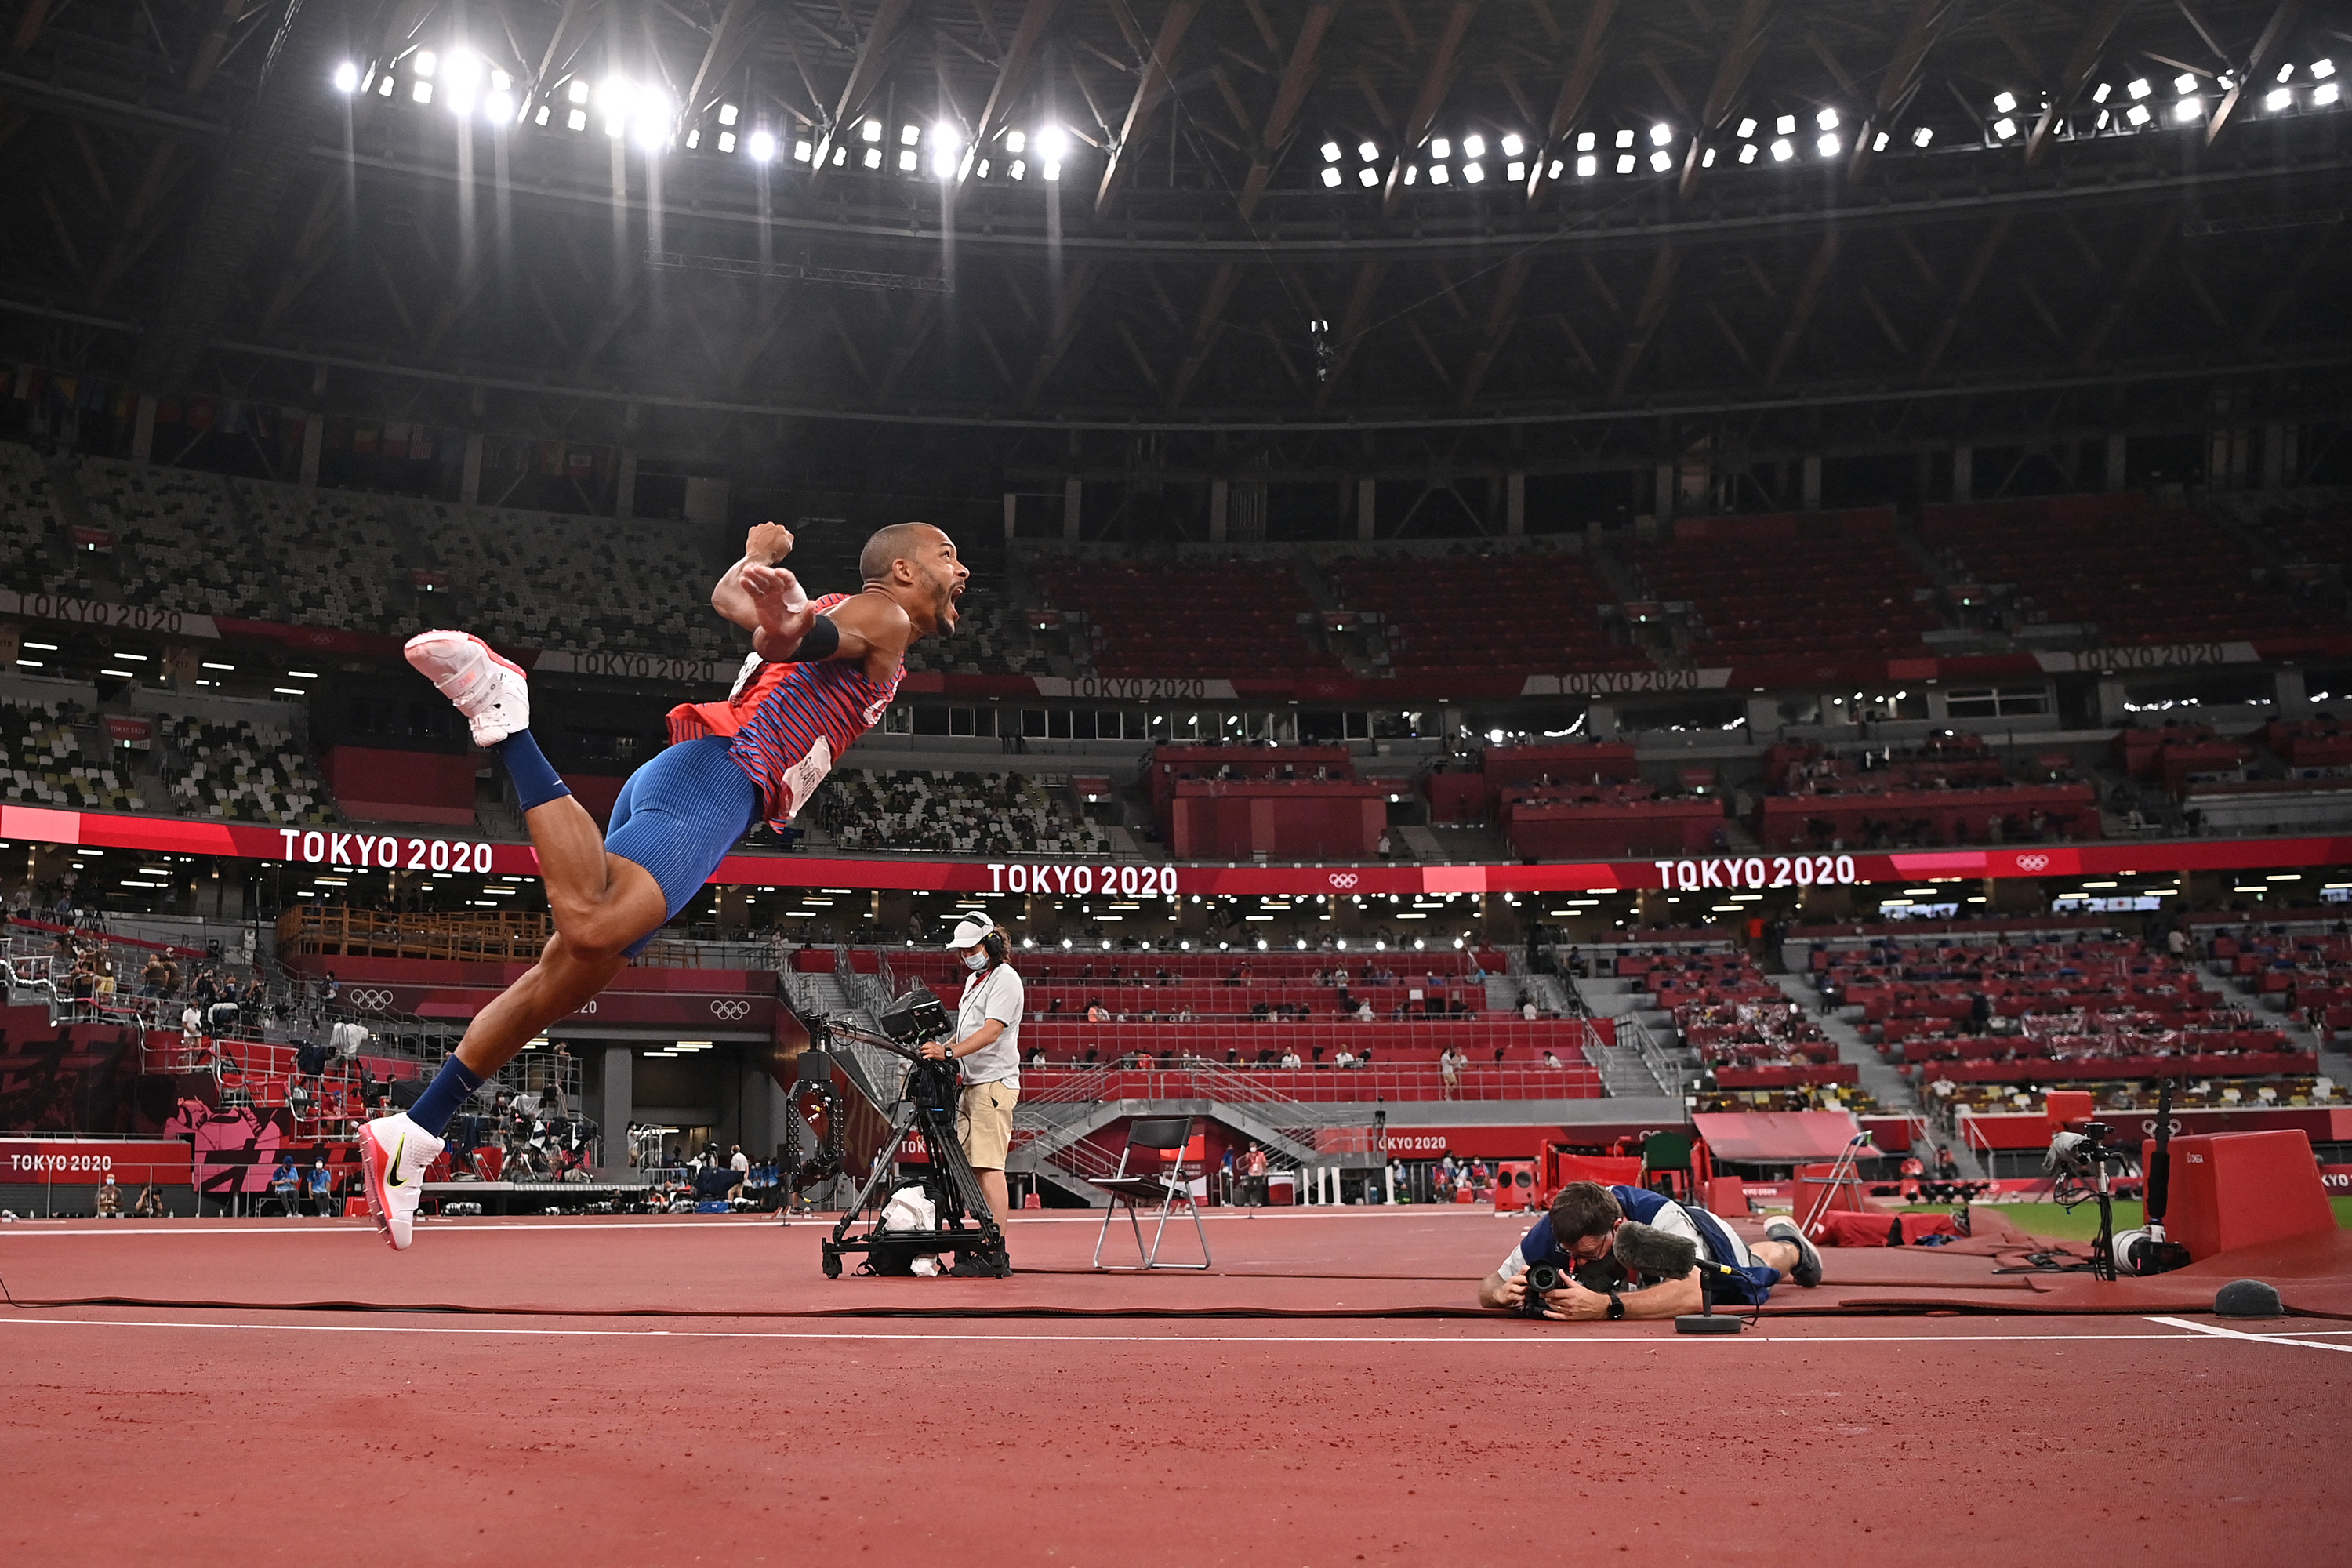 Fotos: O atletismo nas Olimpíadas